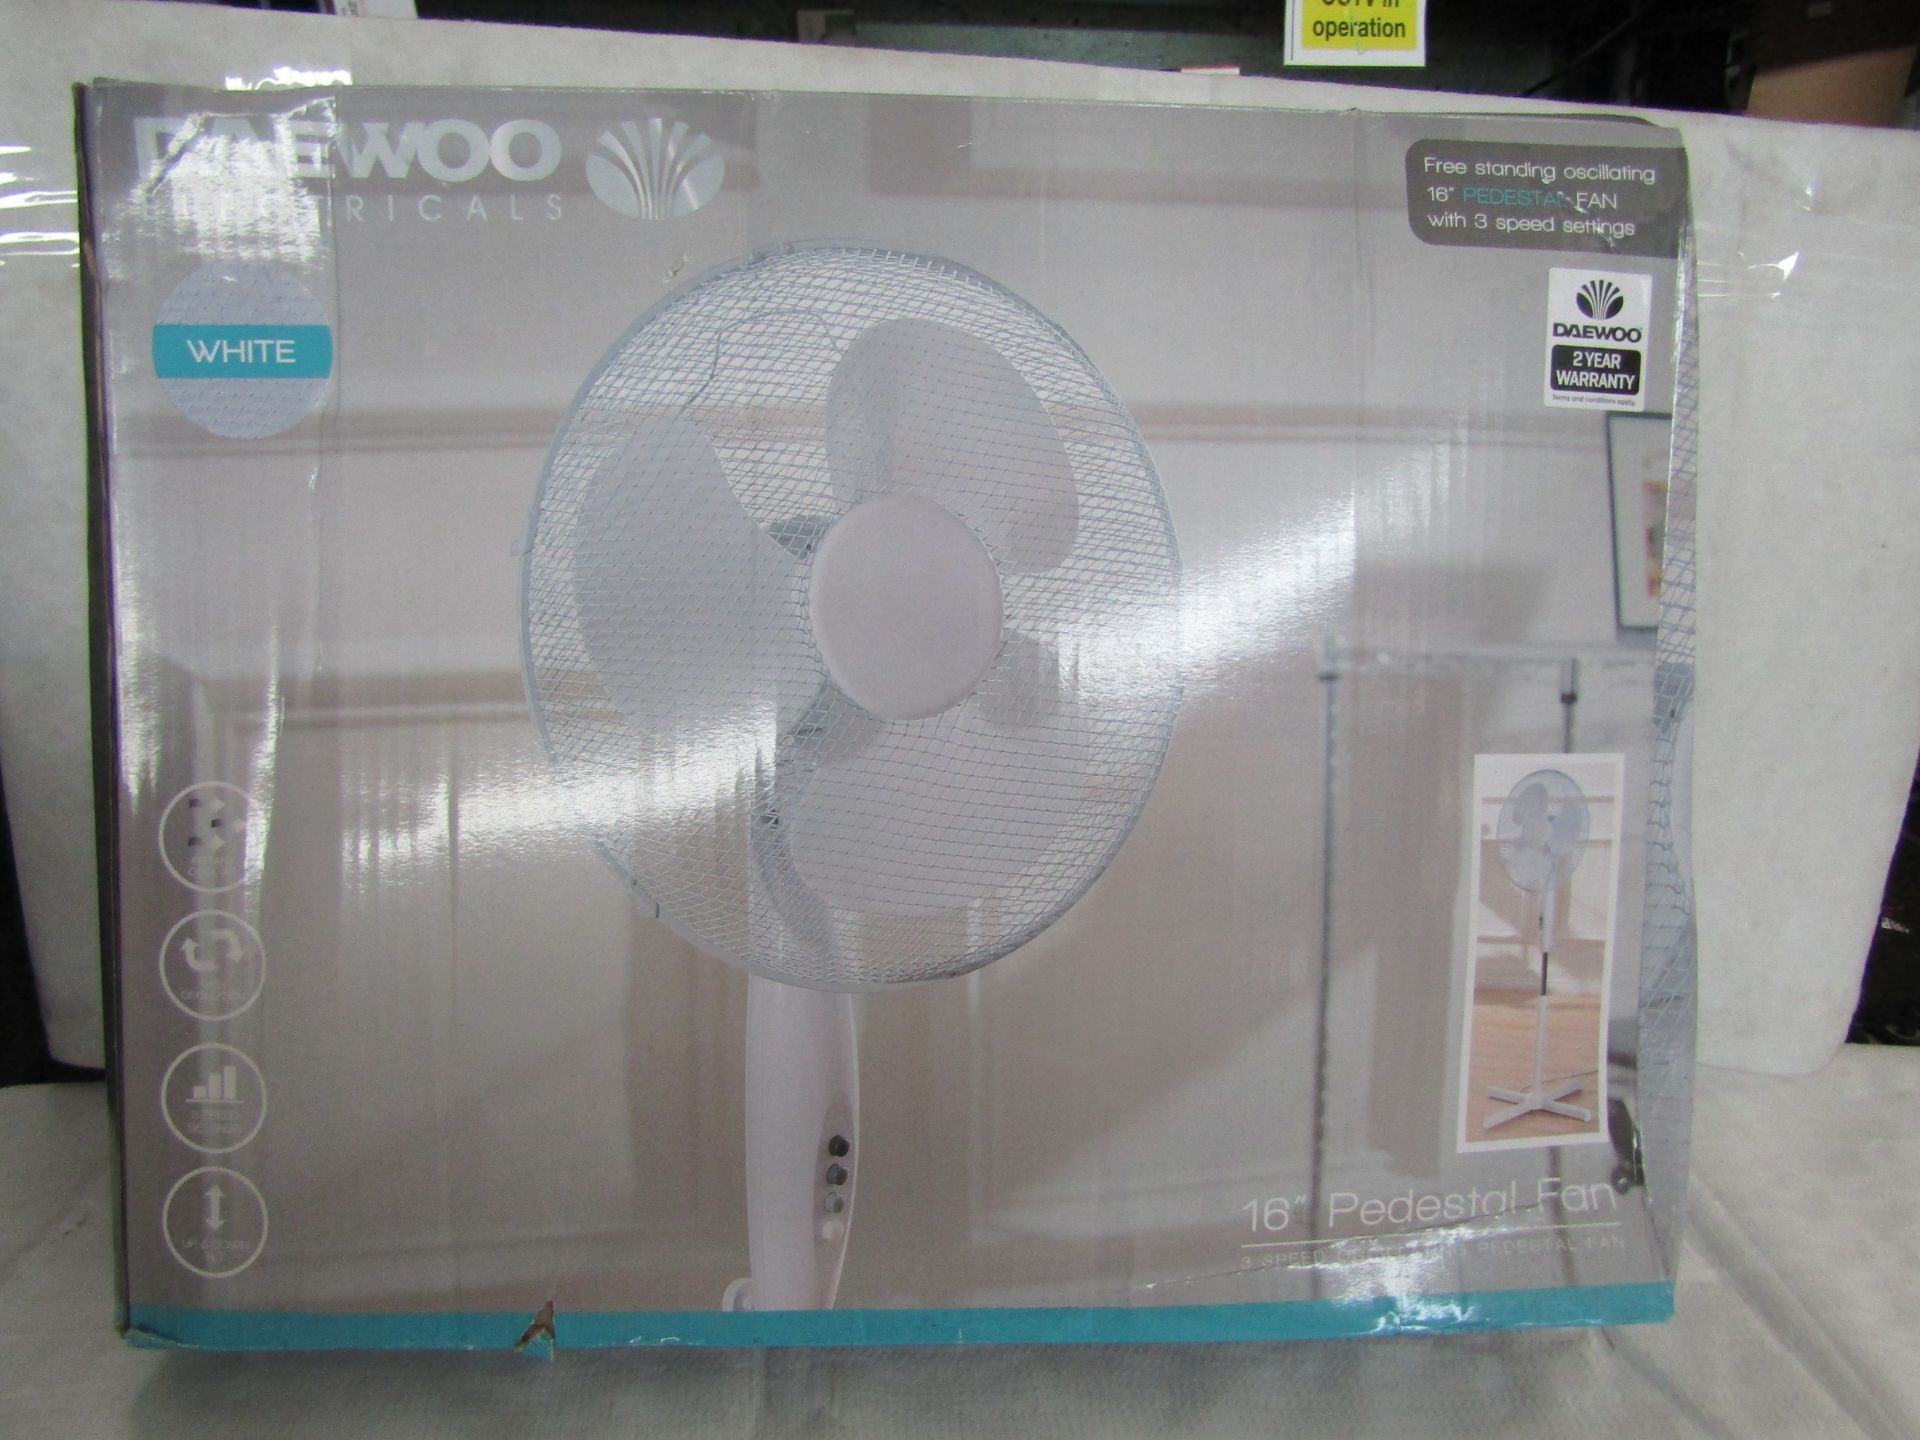 Daewoo - White 16" Floor Pedestal Fan - Untested & Boxed.